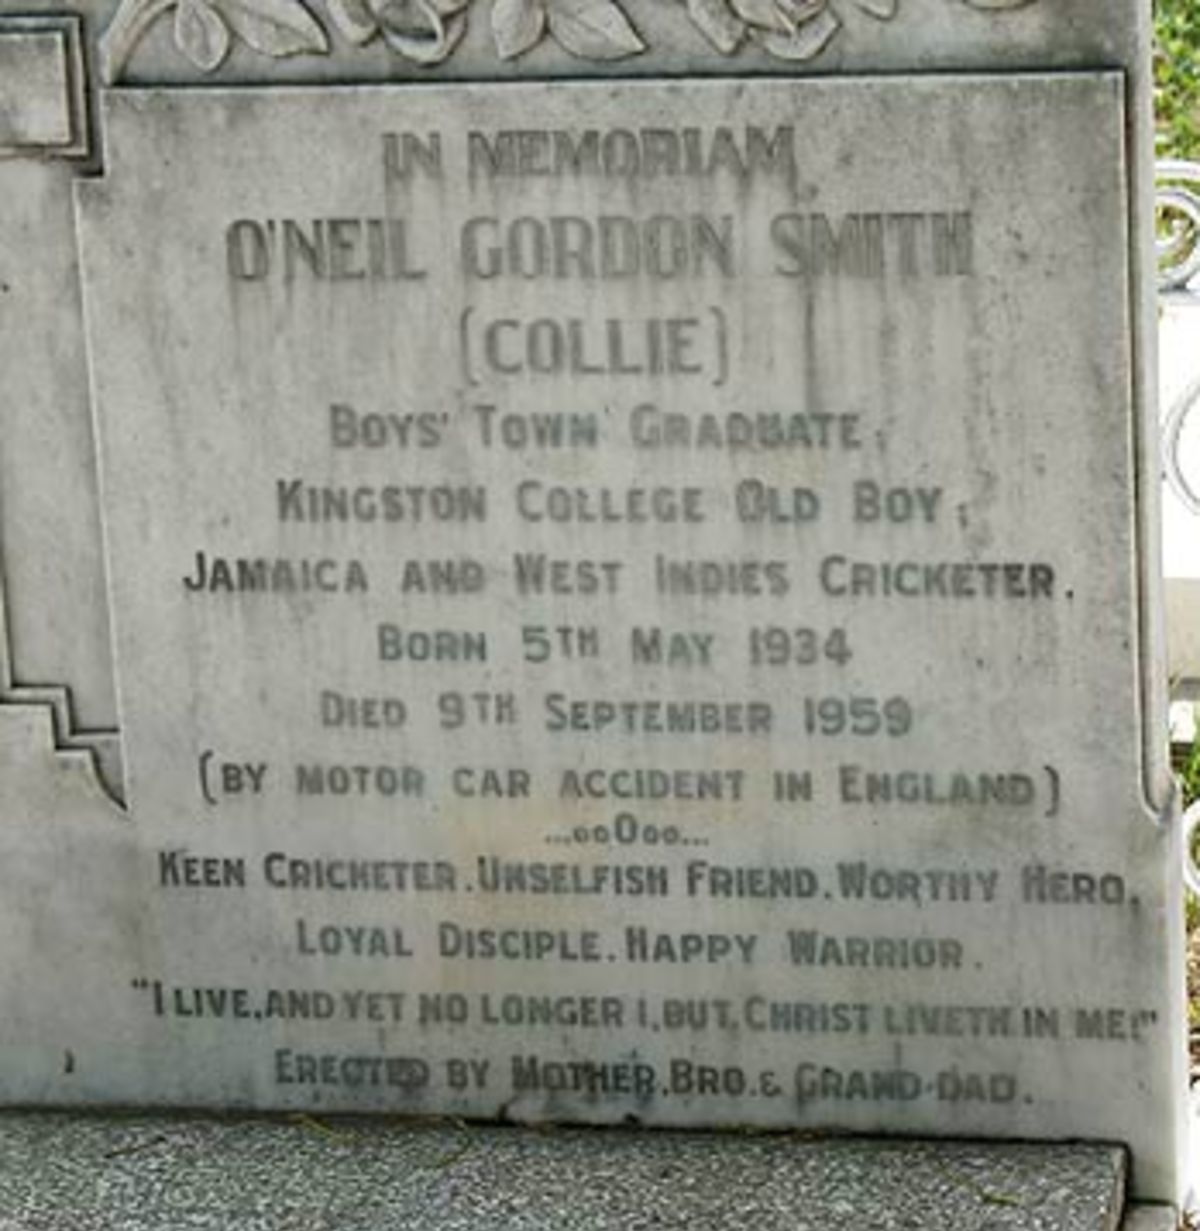 ONeill Gordon Smiths tombstone ESPNcricinfo